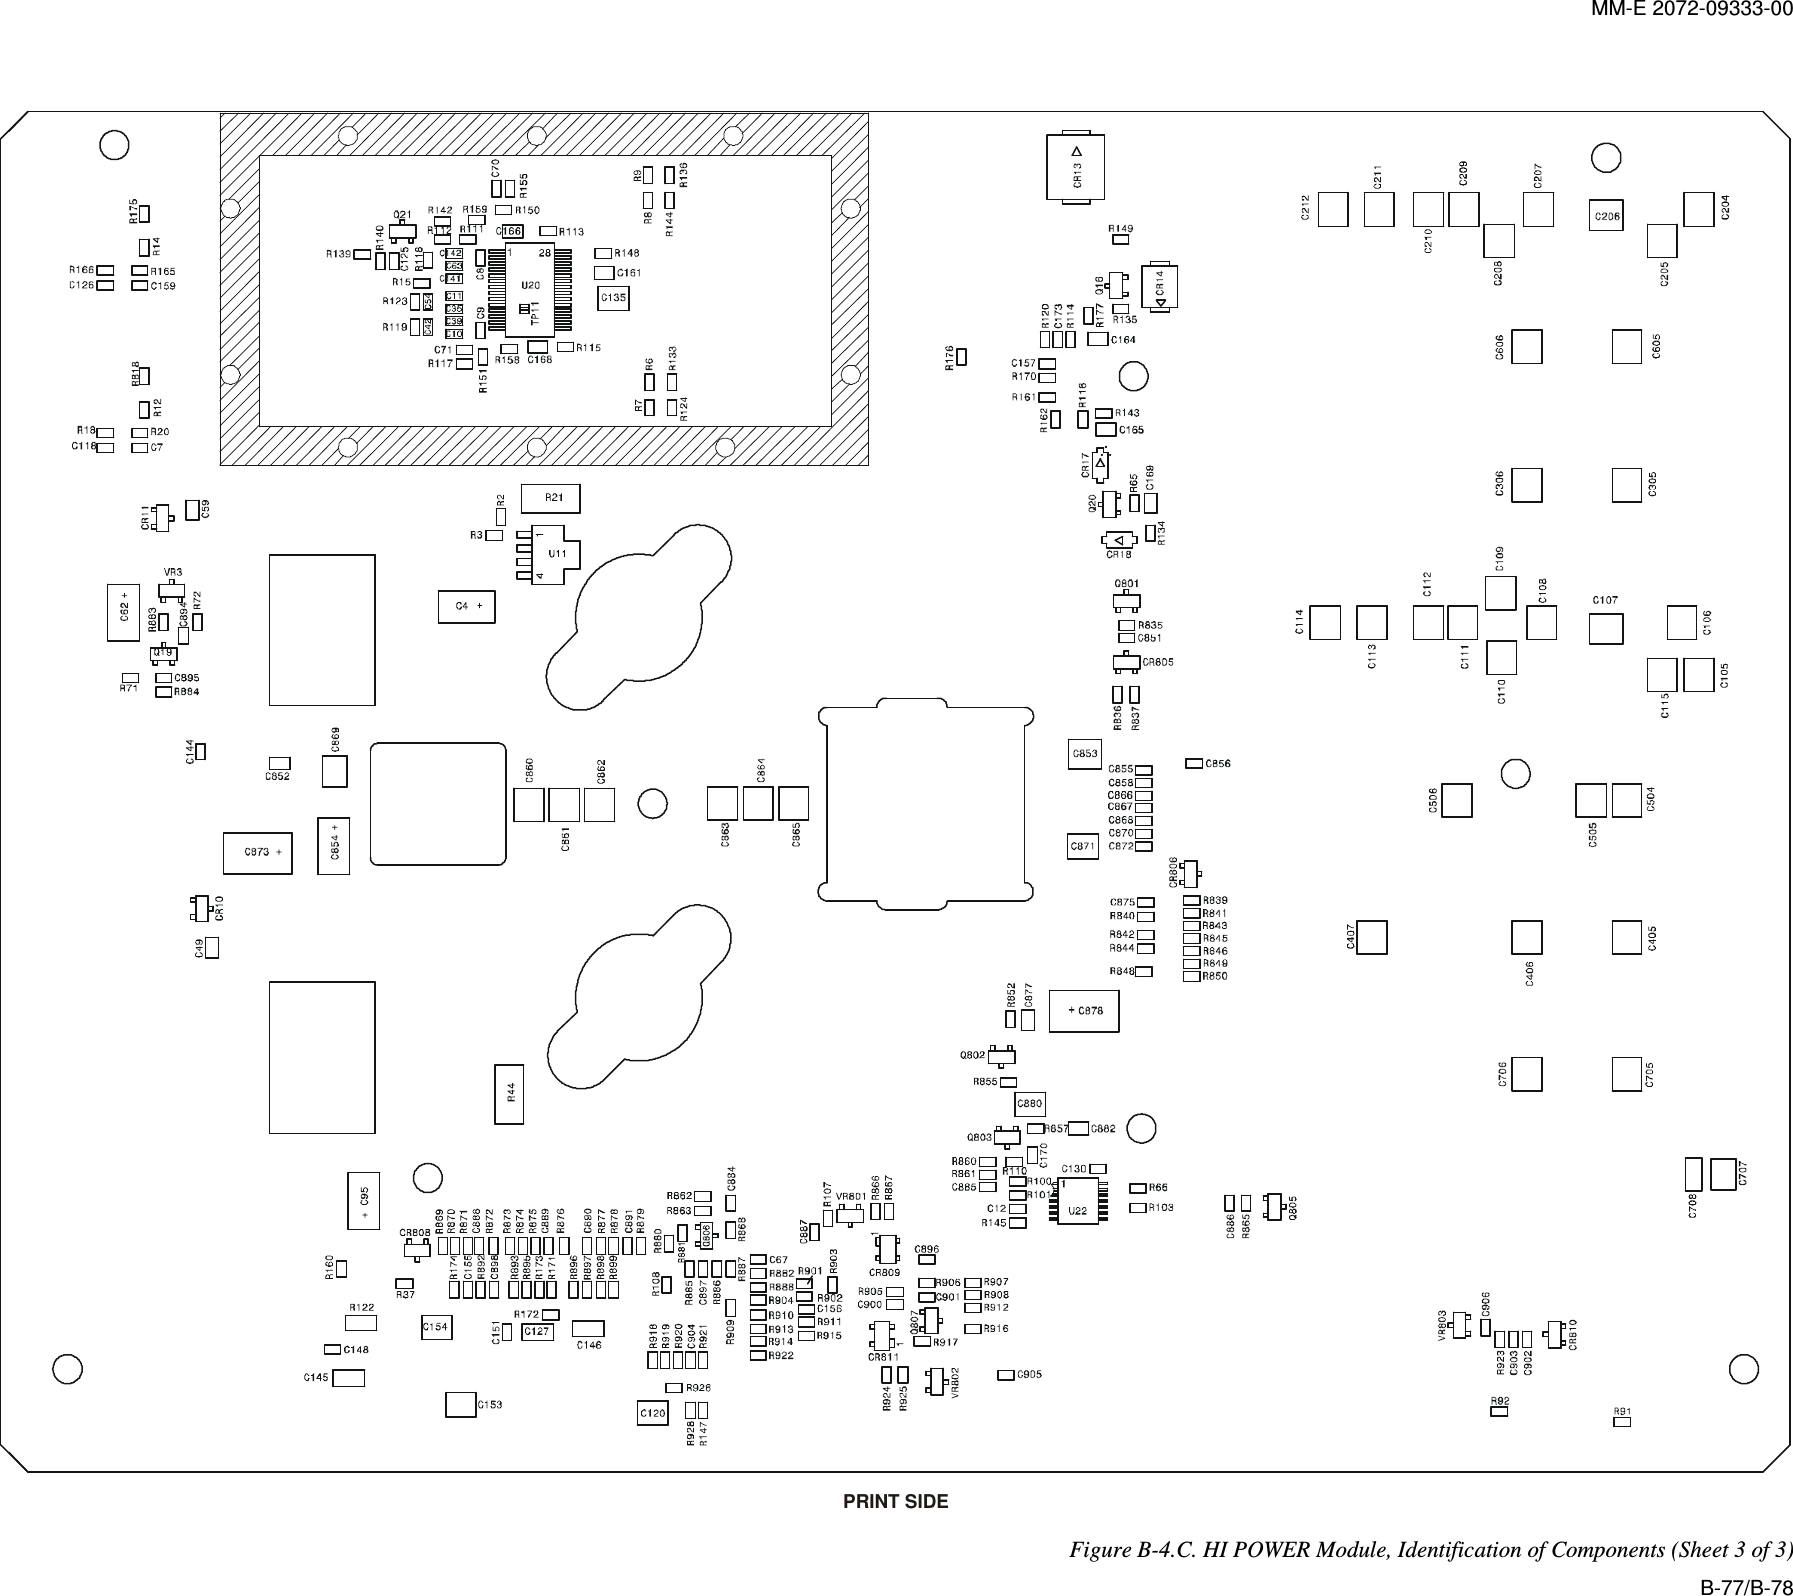 MM-E 2072-09333-00   PRINT SIDE  Figure  B-4.C. HI POWER Module, Identification of Components (Sheet 3 of 3) B-77/B-78 